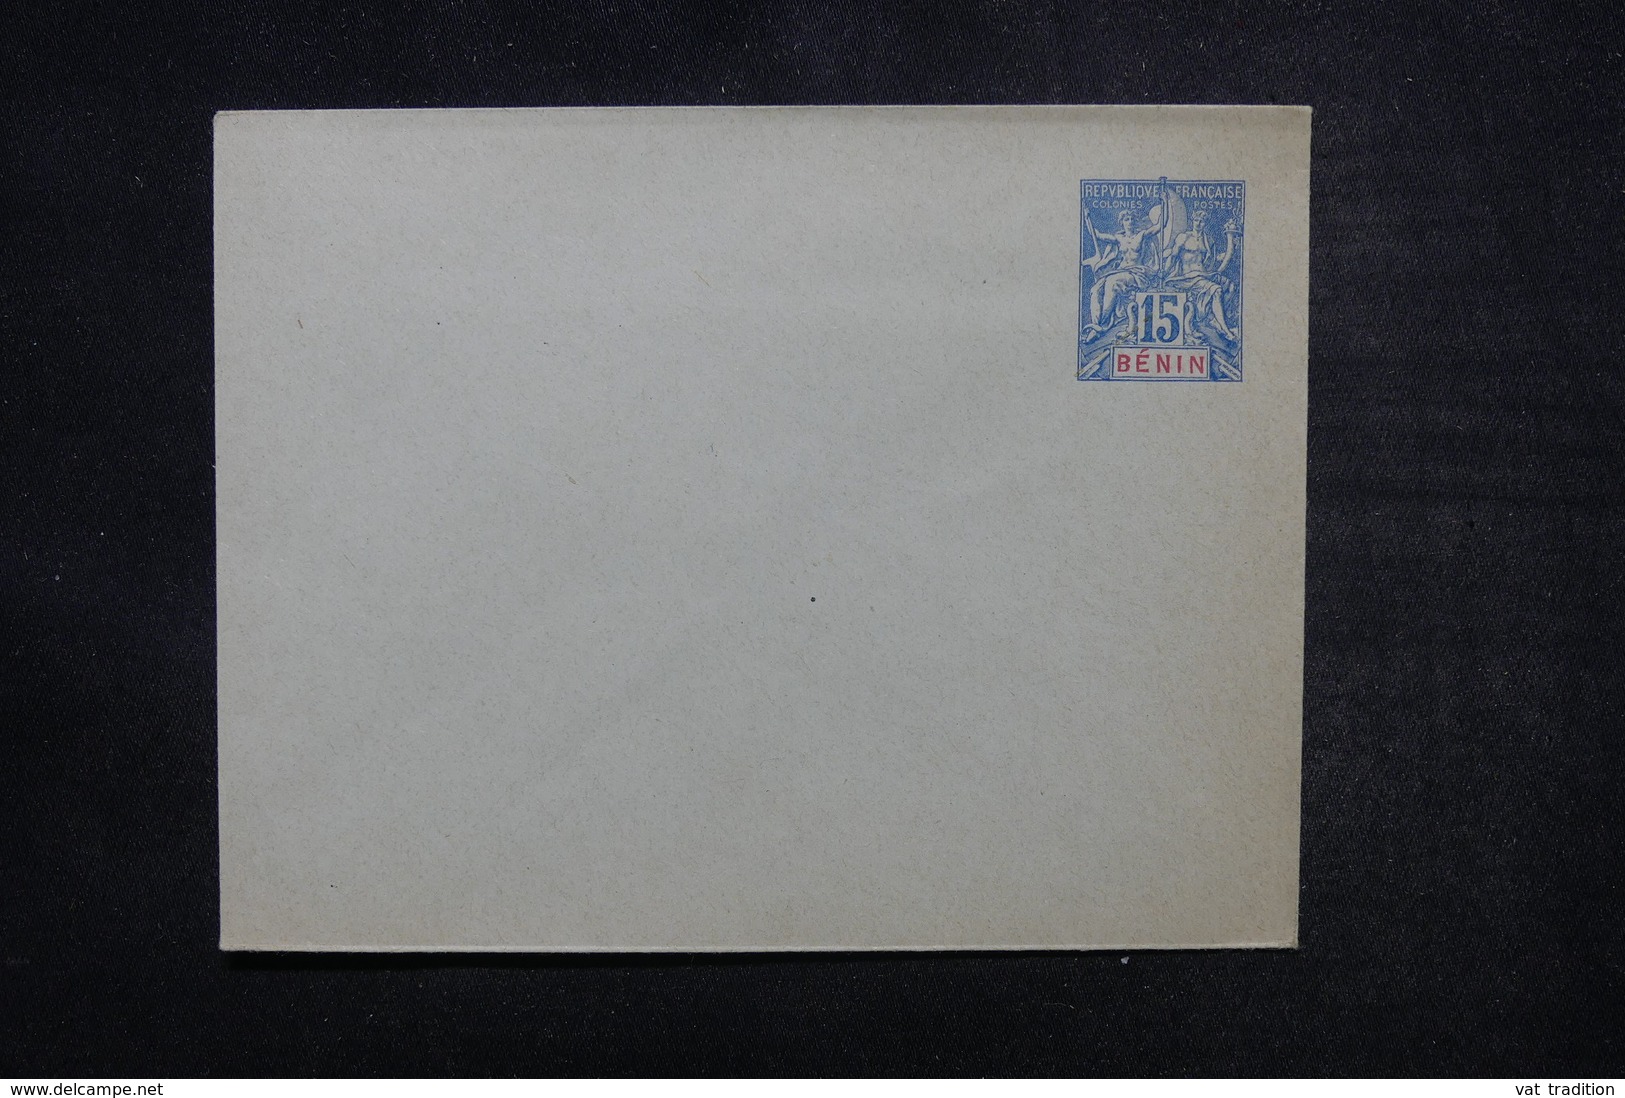 BÉNIN - Entier Postal Type Groupe - Non Circulé - L 54154 - Briefe U. Dokumente